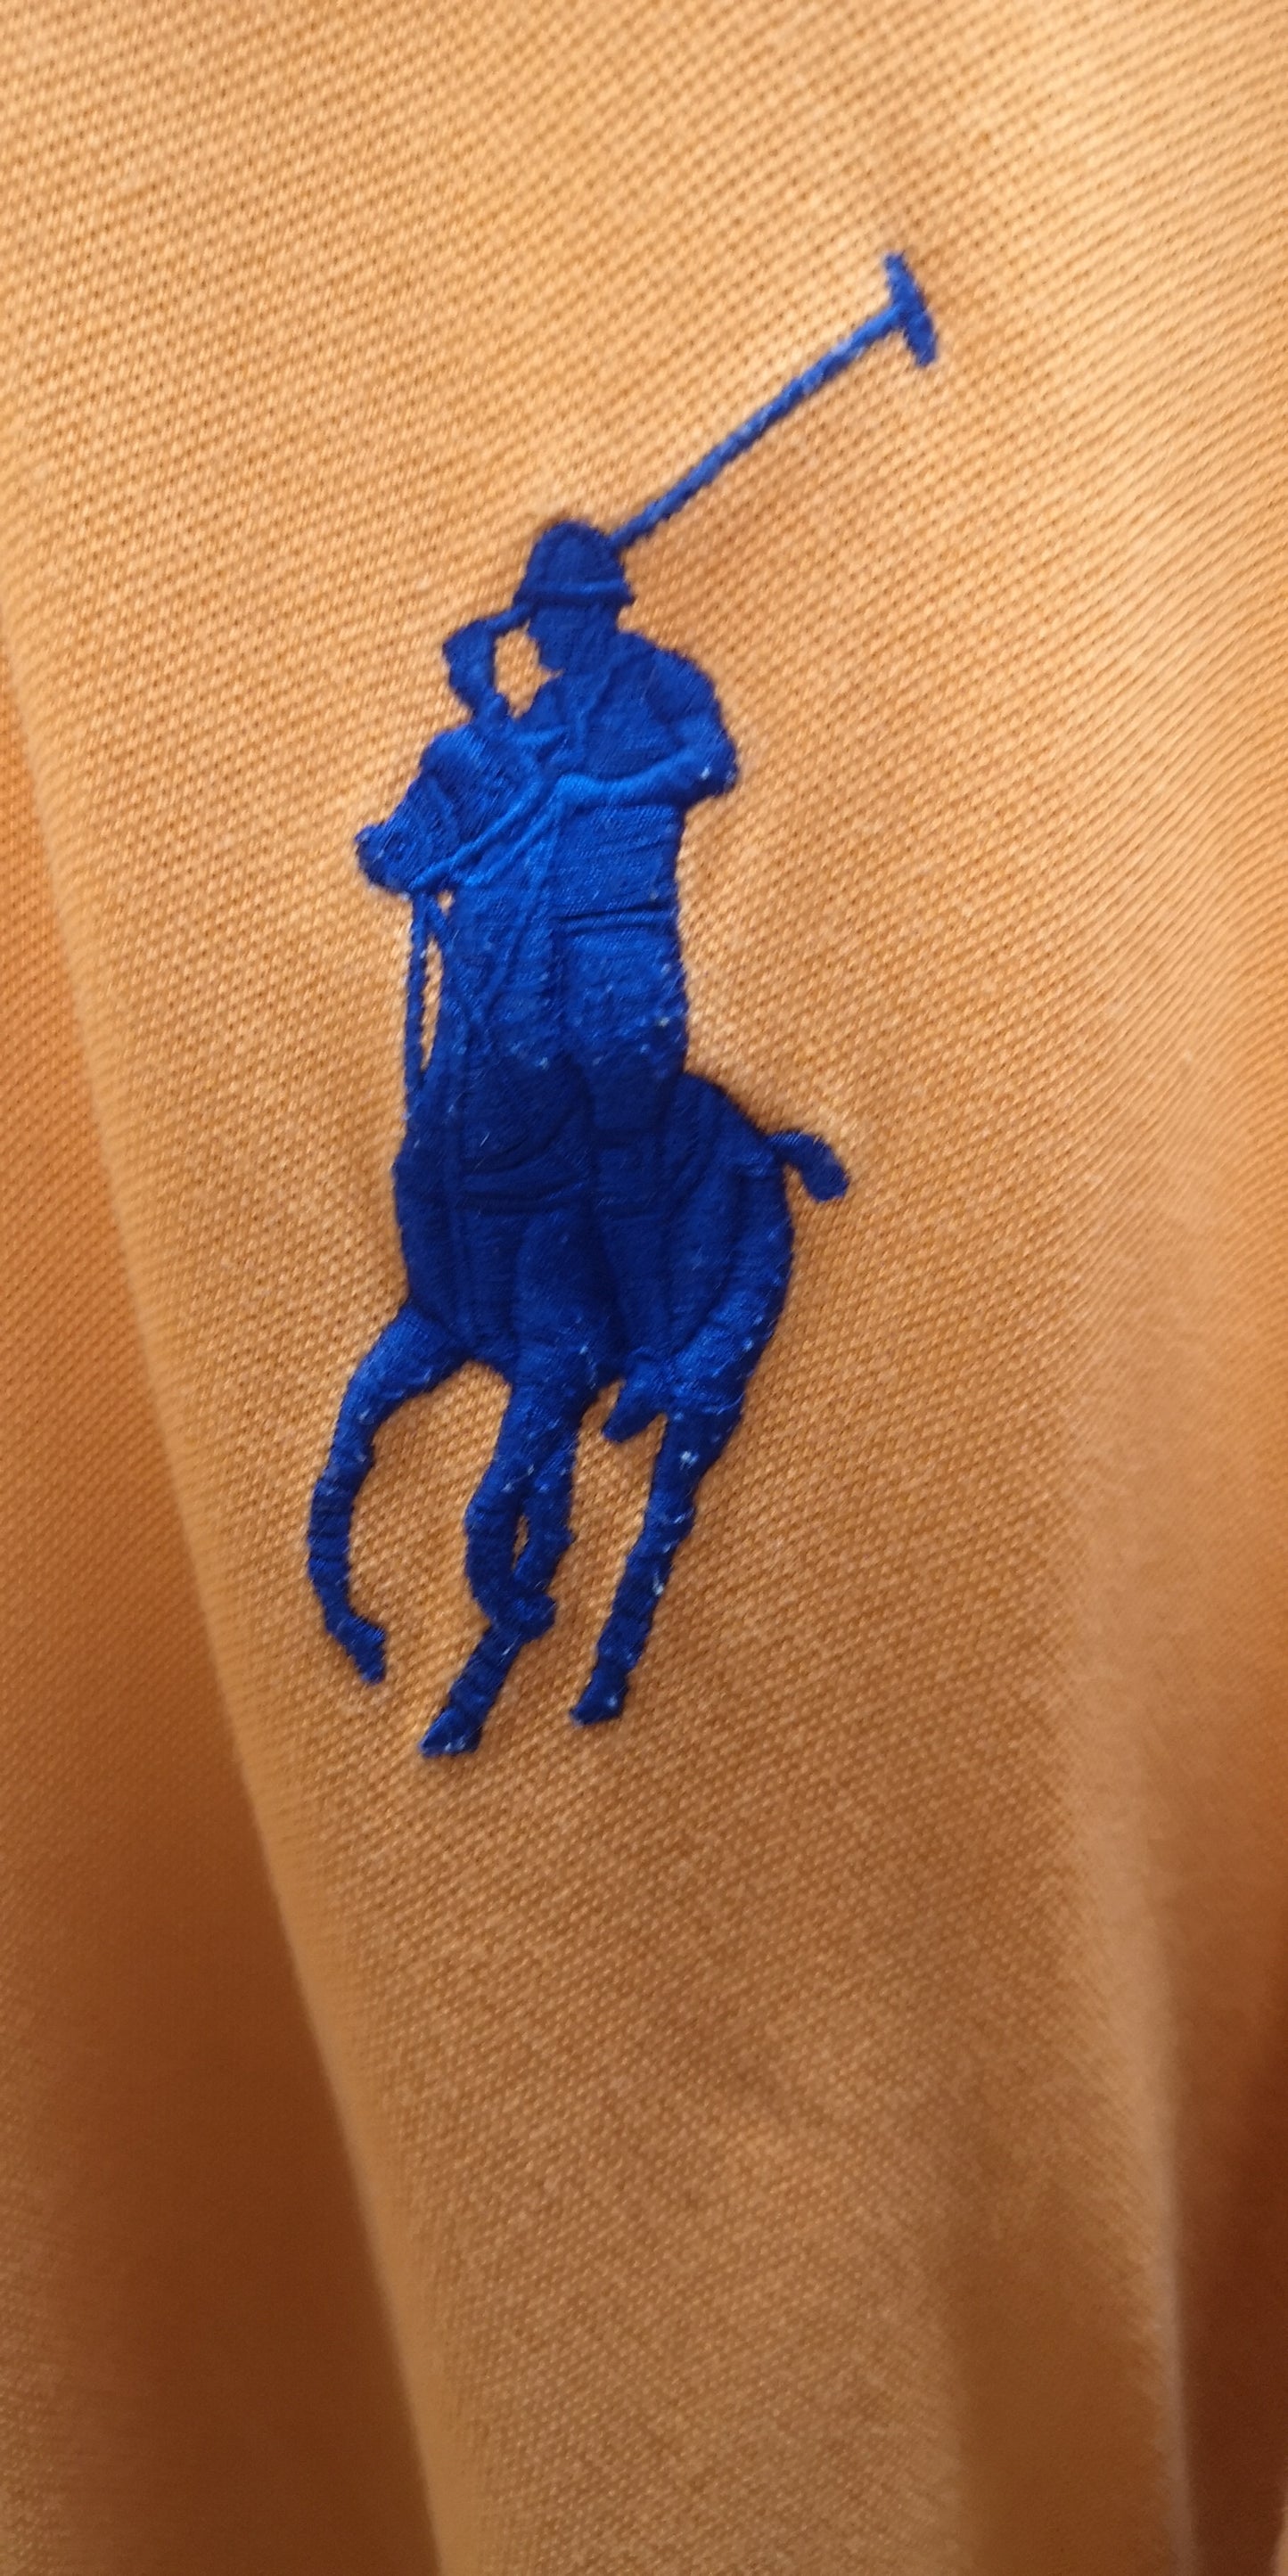 Ralph Lauren Orange Cotton Polo Shirt Size XXL